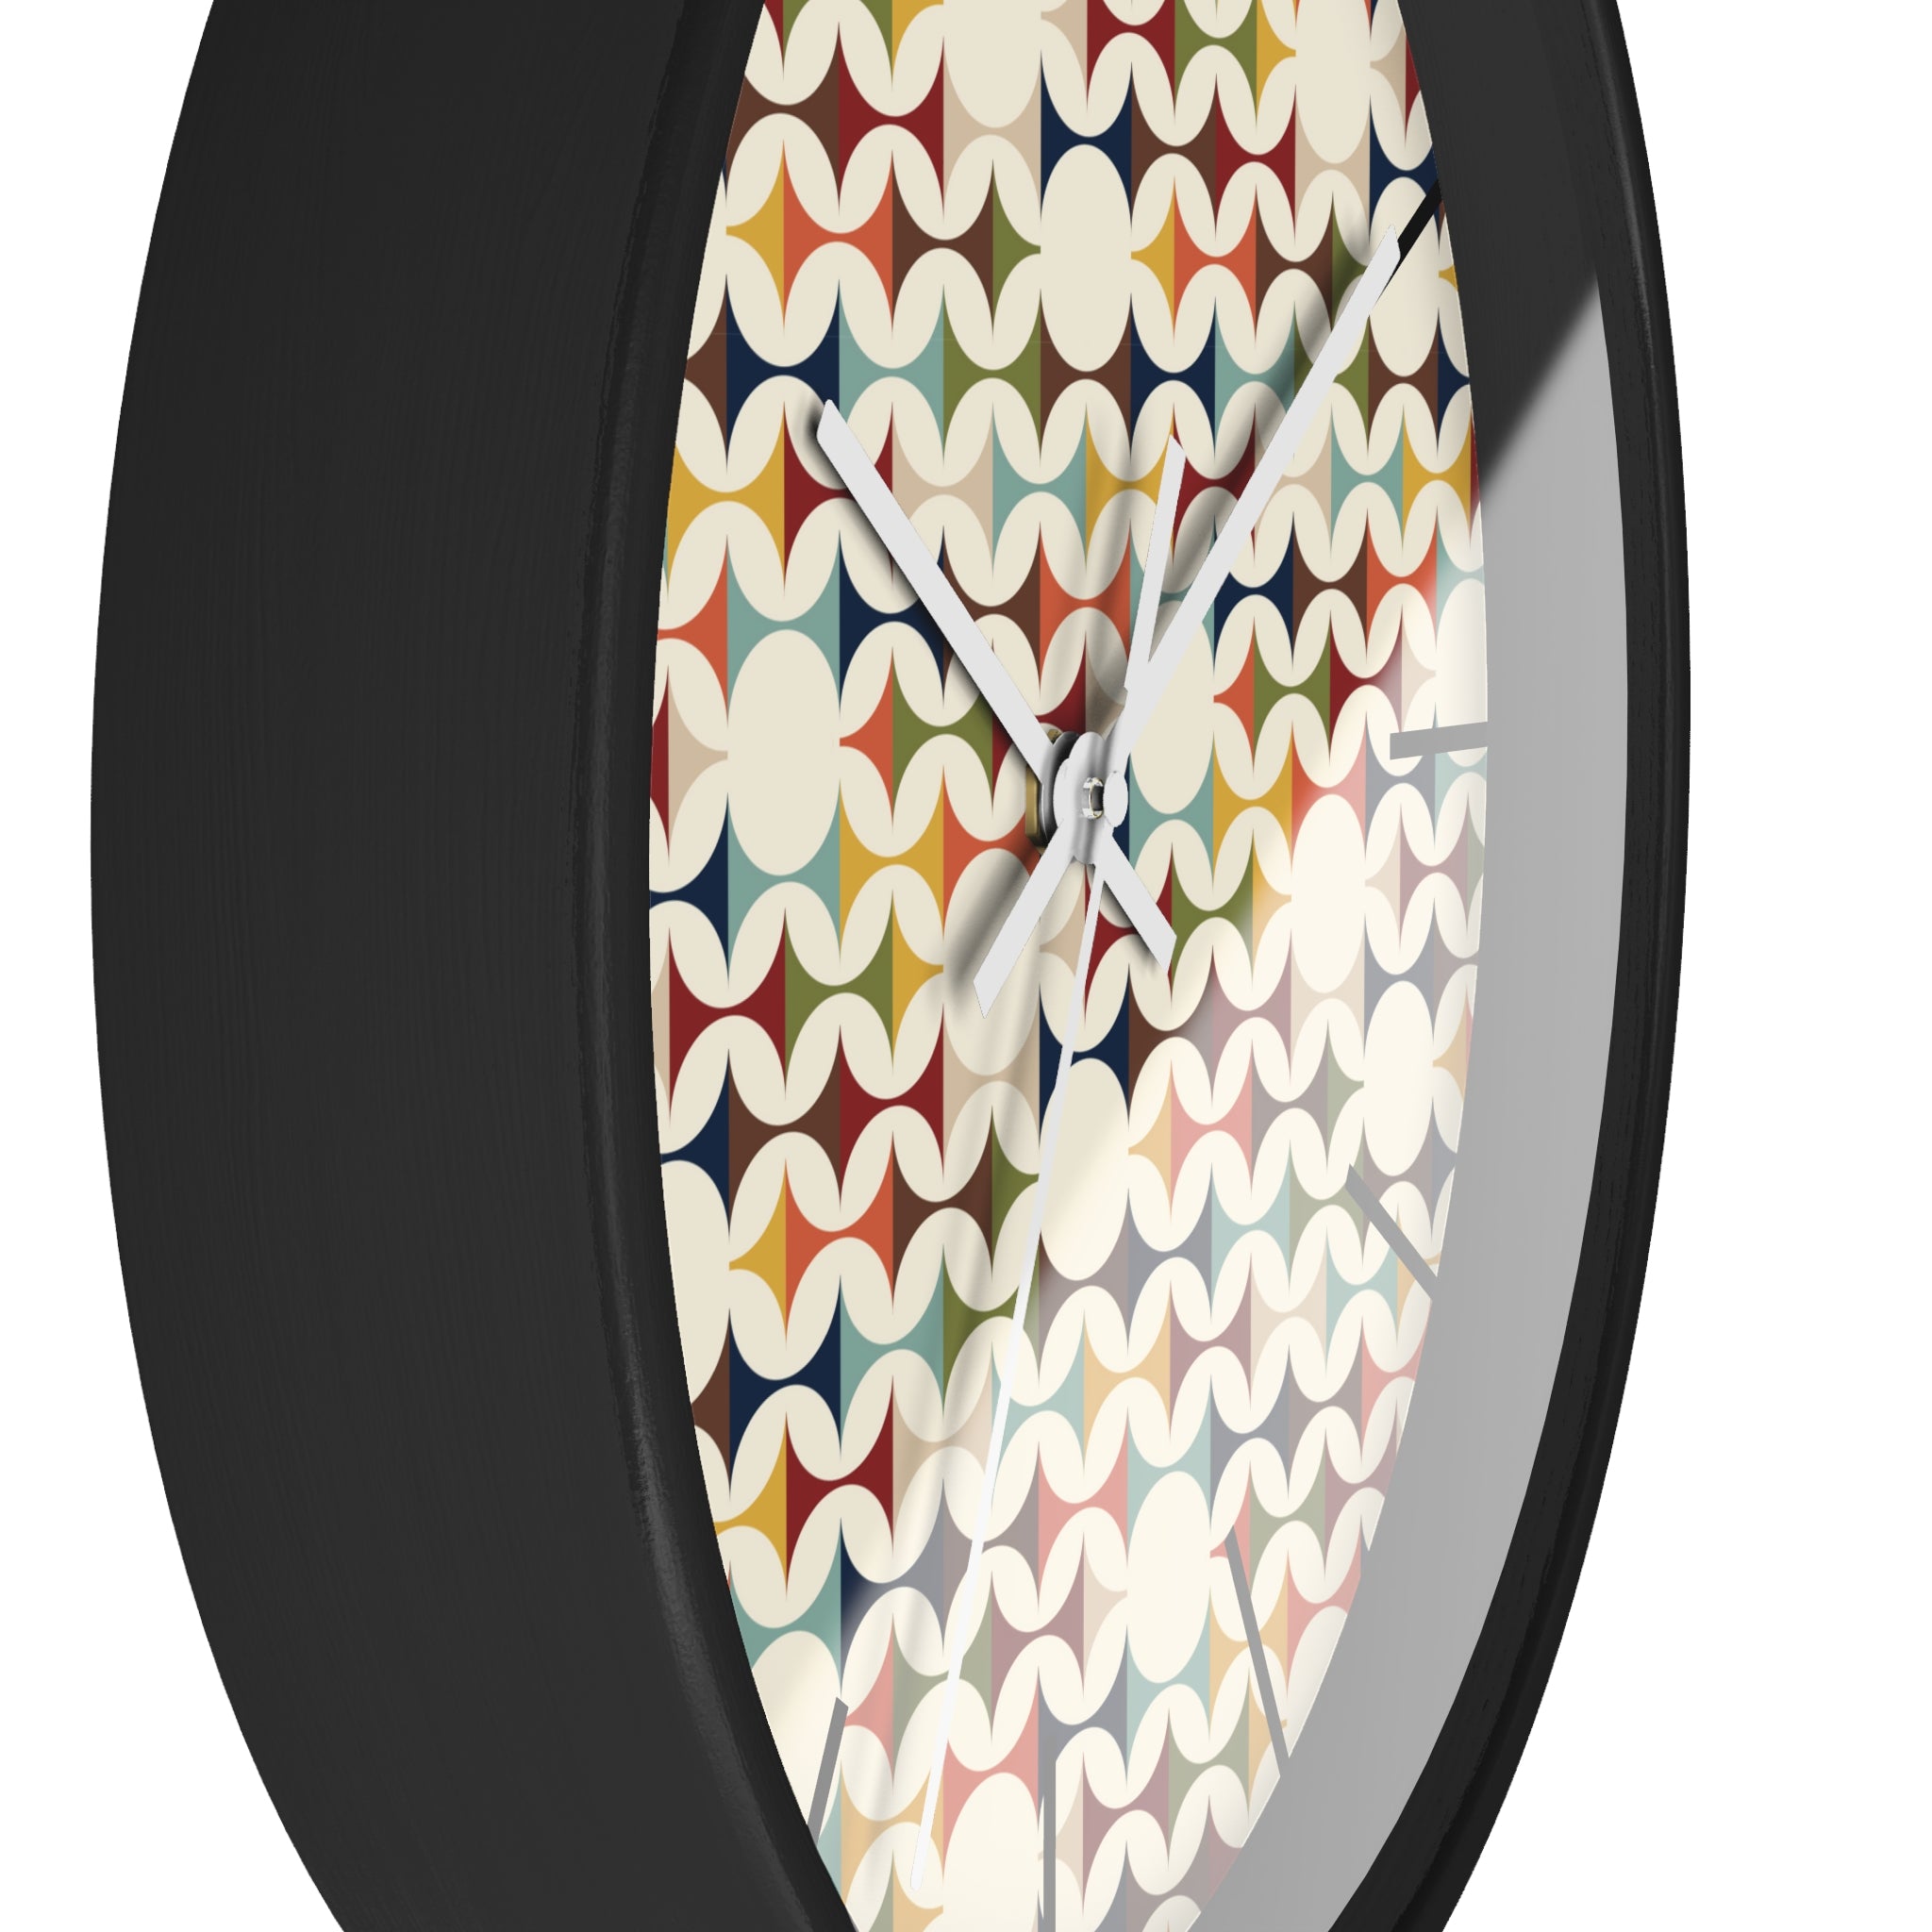 Mid Century Modern Scandinavian Designed, Geometric Retro Colorful Retro Wall Clock